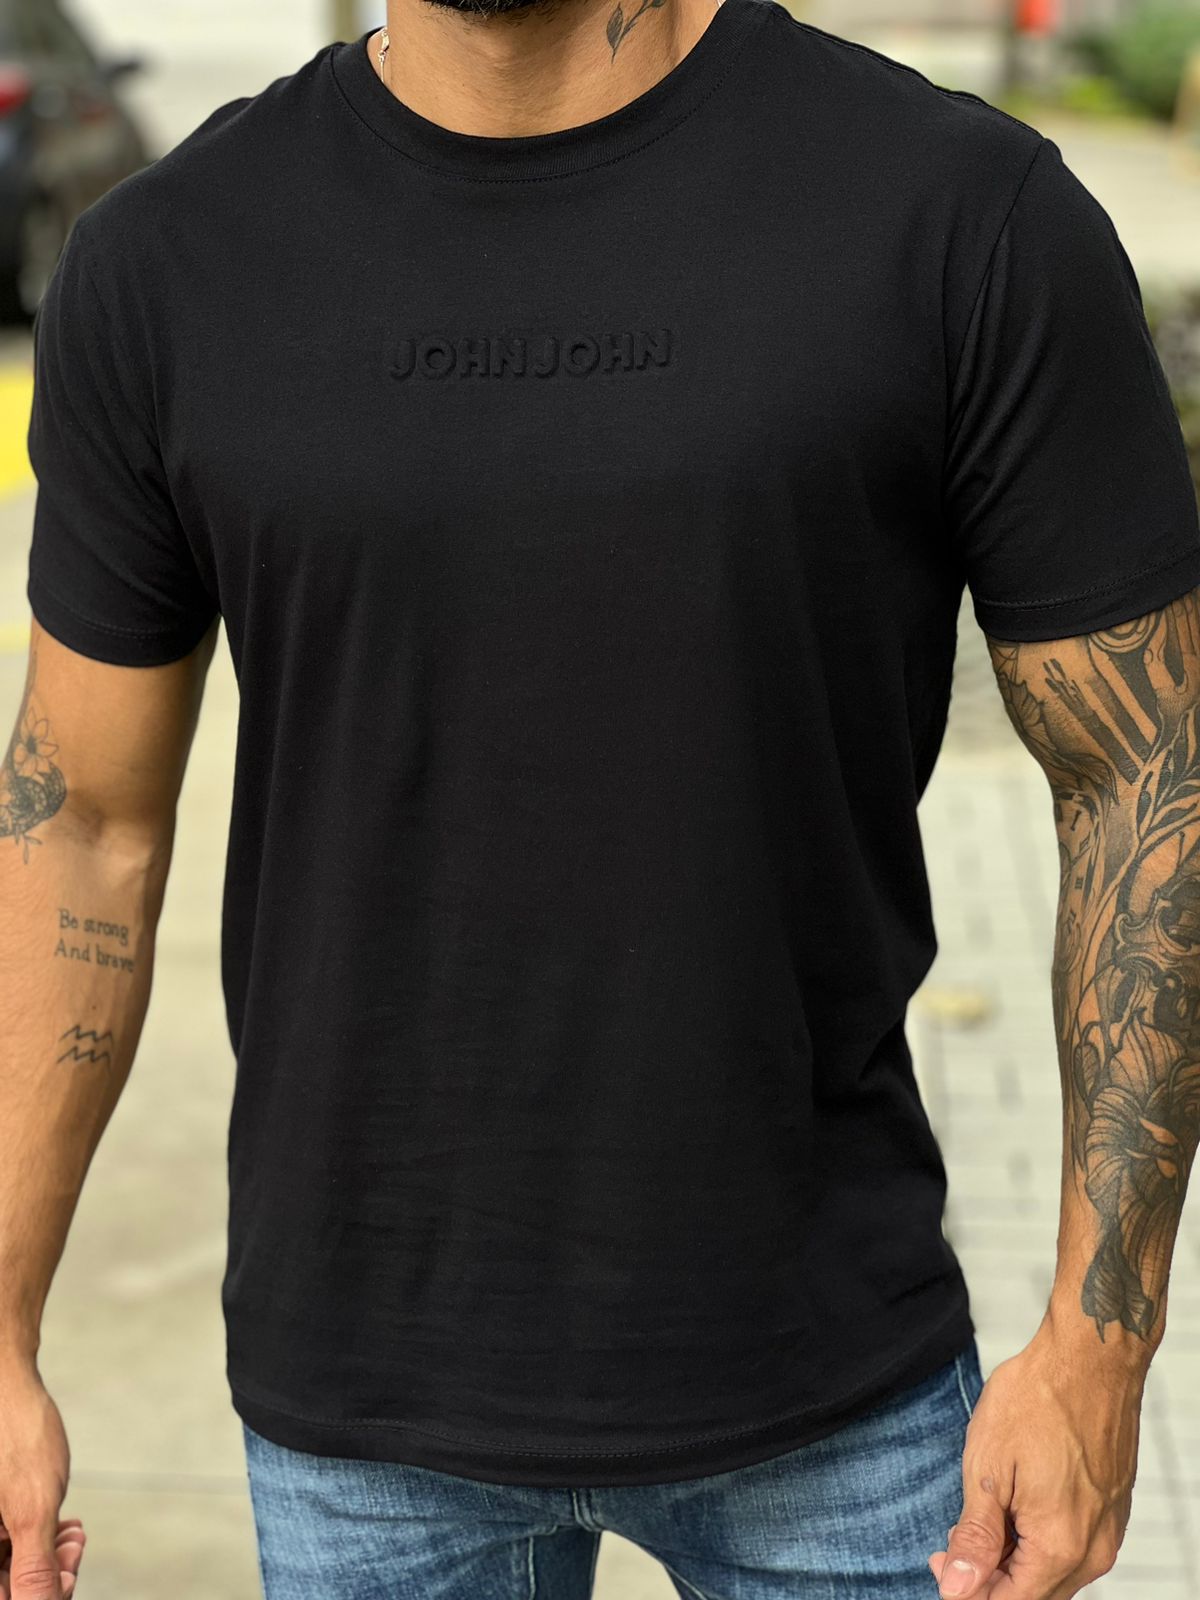 Camiseta John John The Beat Masculina - Dom Store Multimarcas Vestuário  Calçados Acessórios